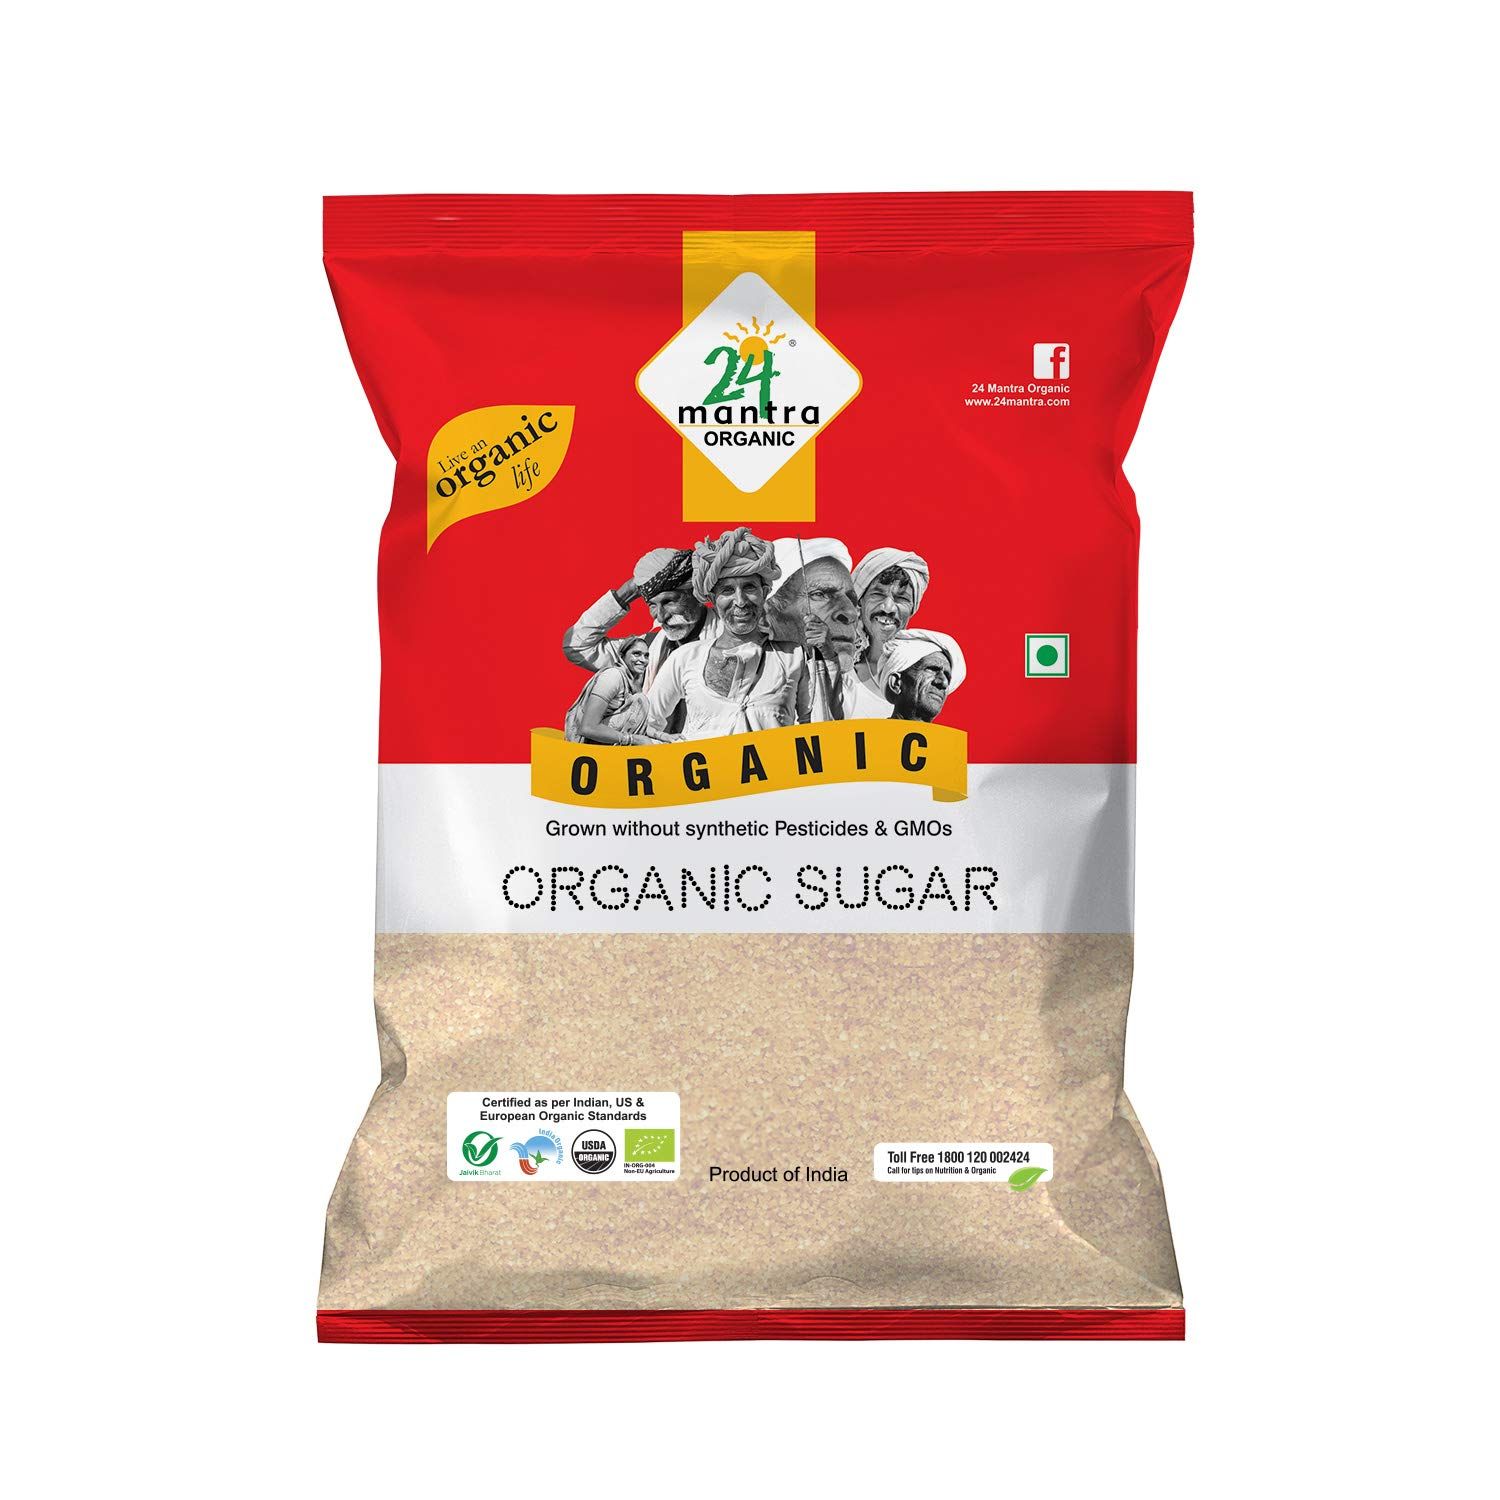 24 Mantra Organic Sugar Image